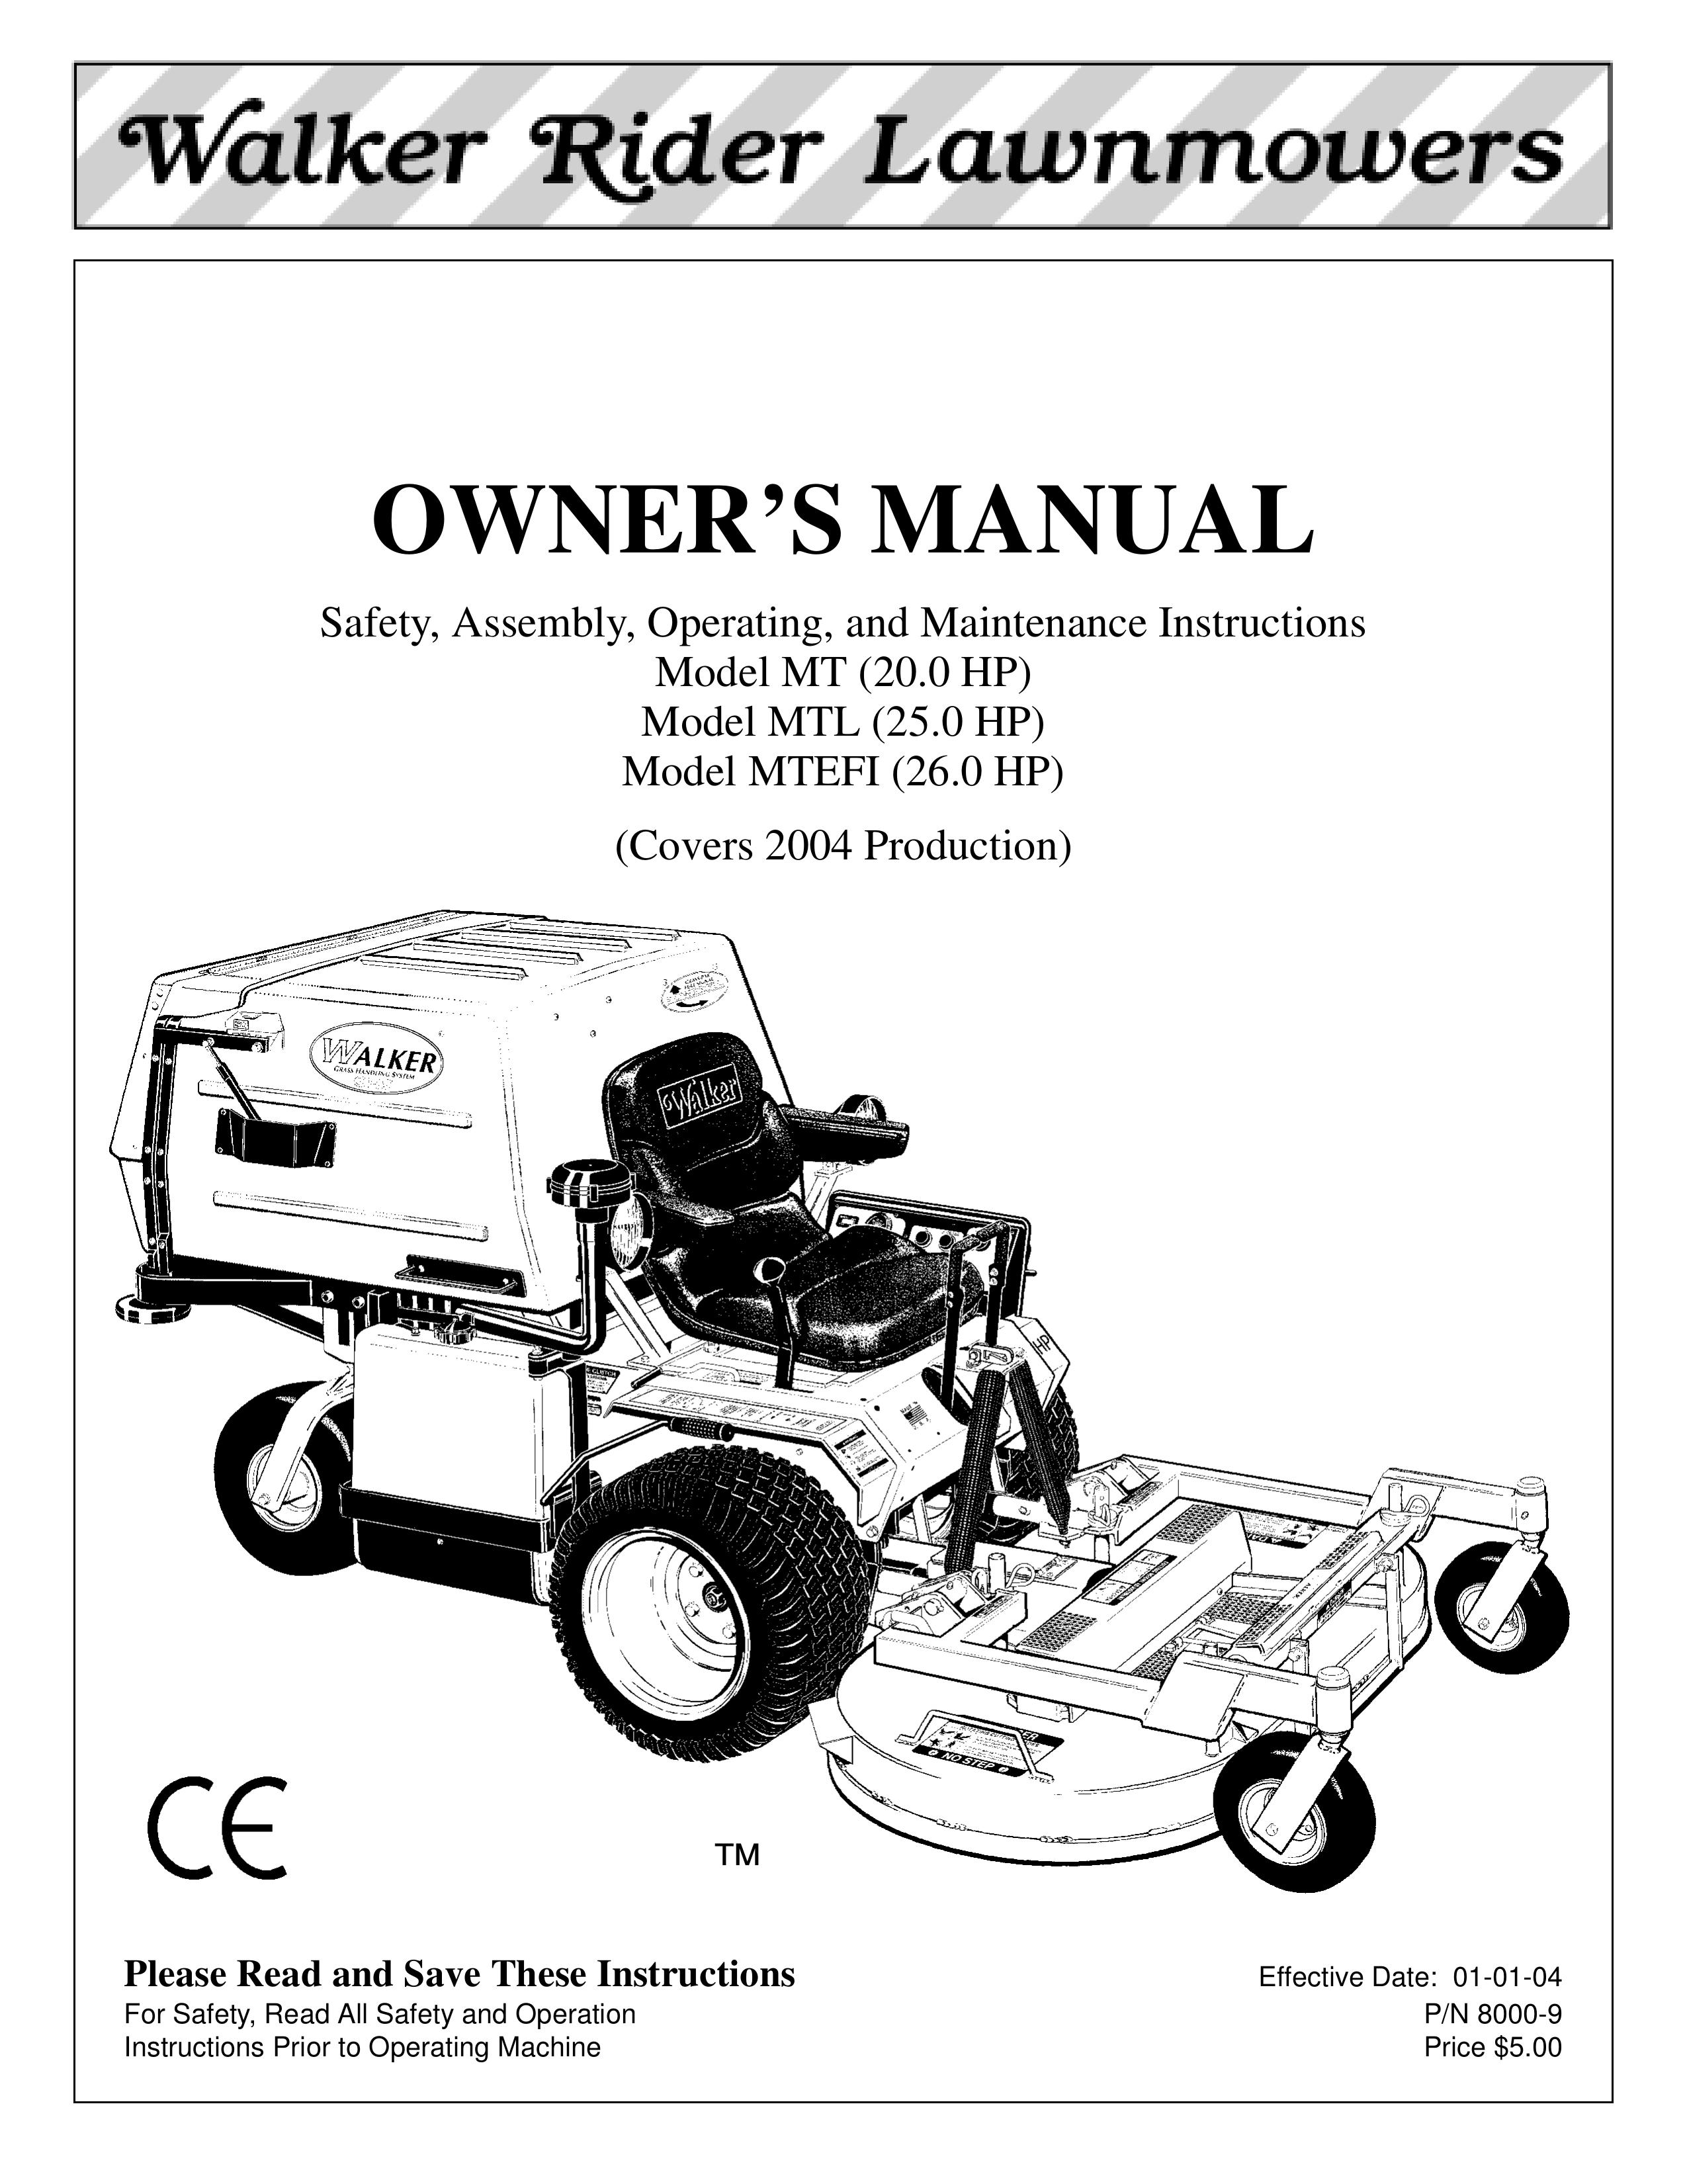 Walker MT, MTL, MTEFI, MTLEFI Lawn Mower User Manual